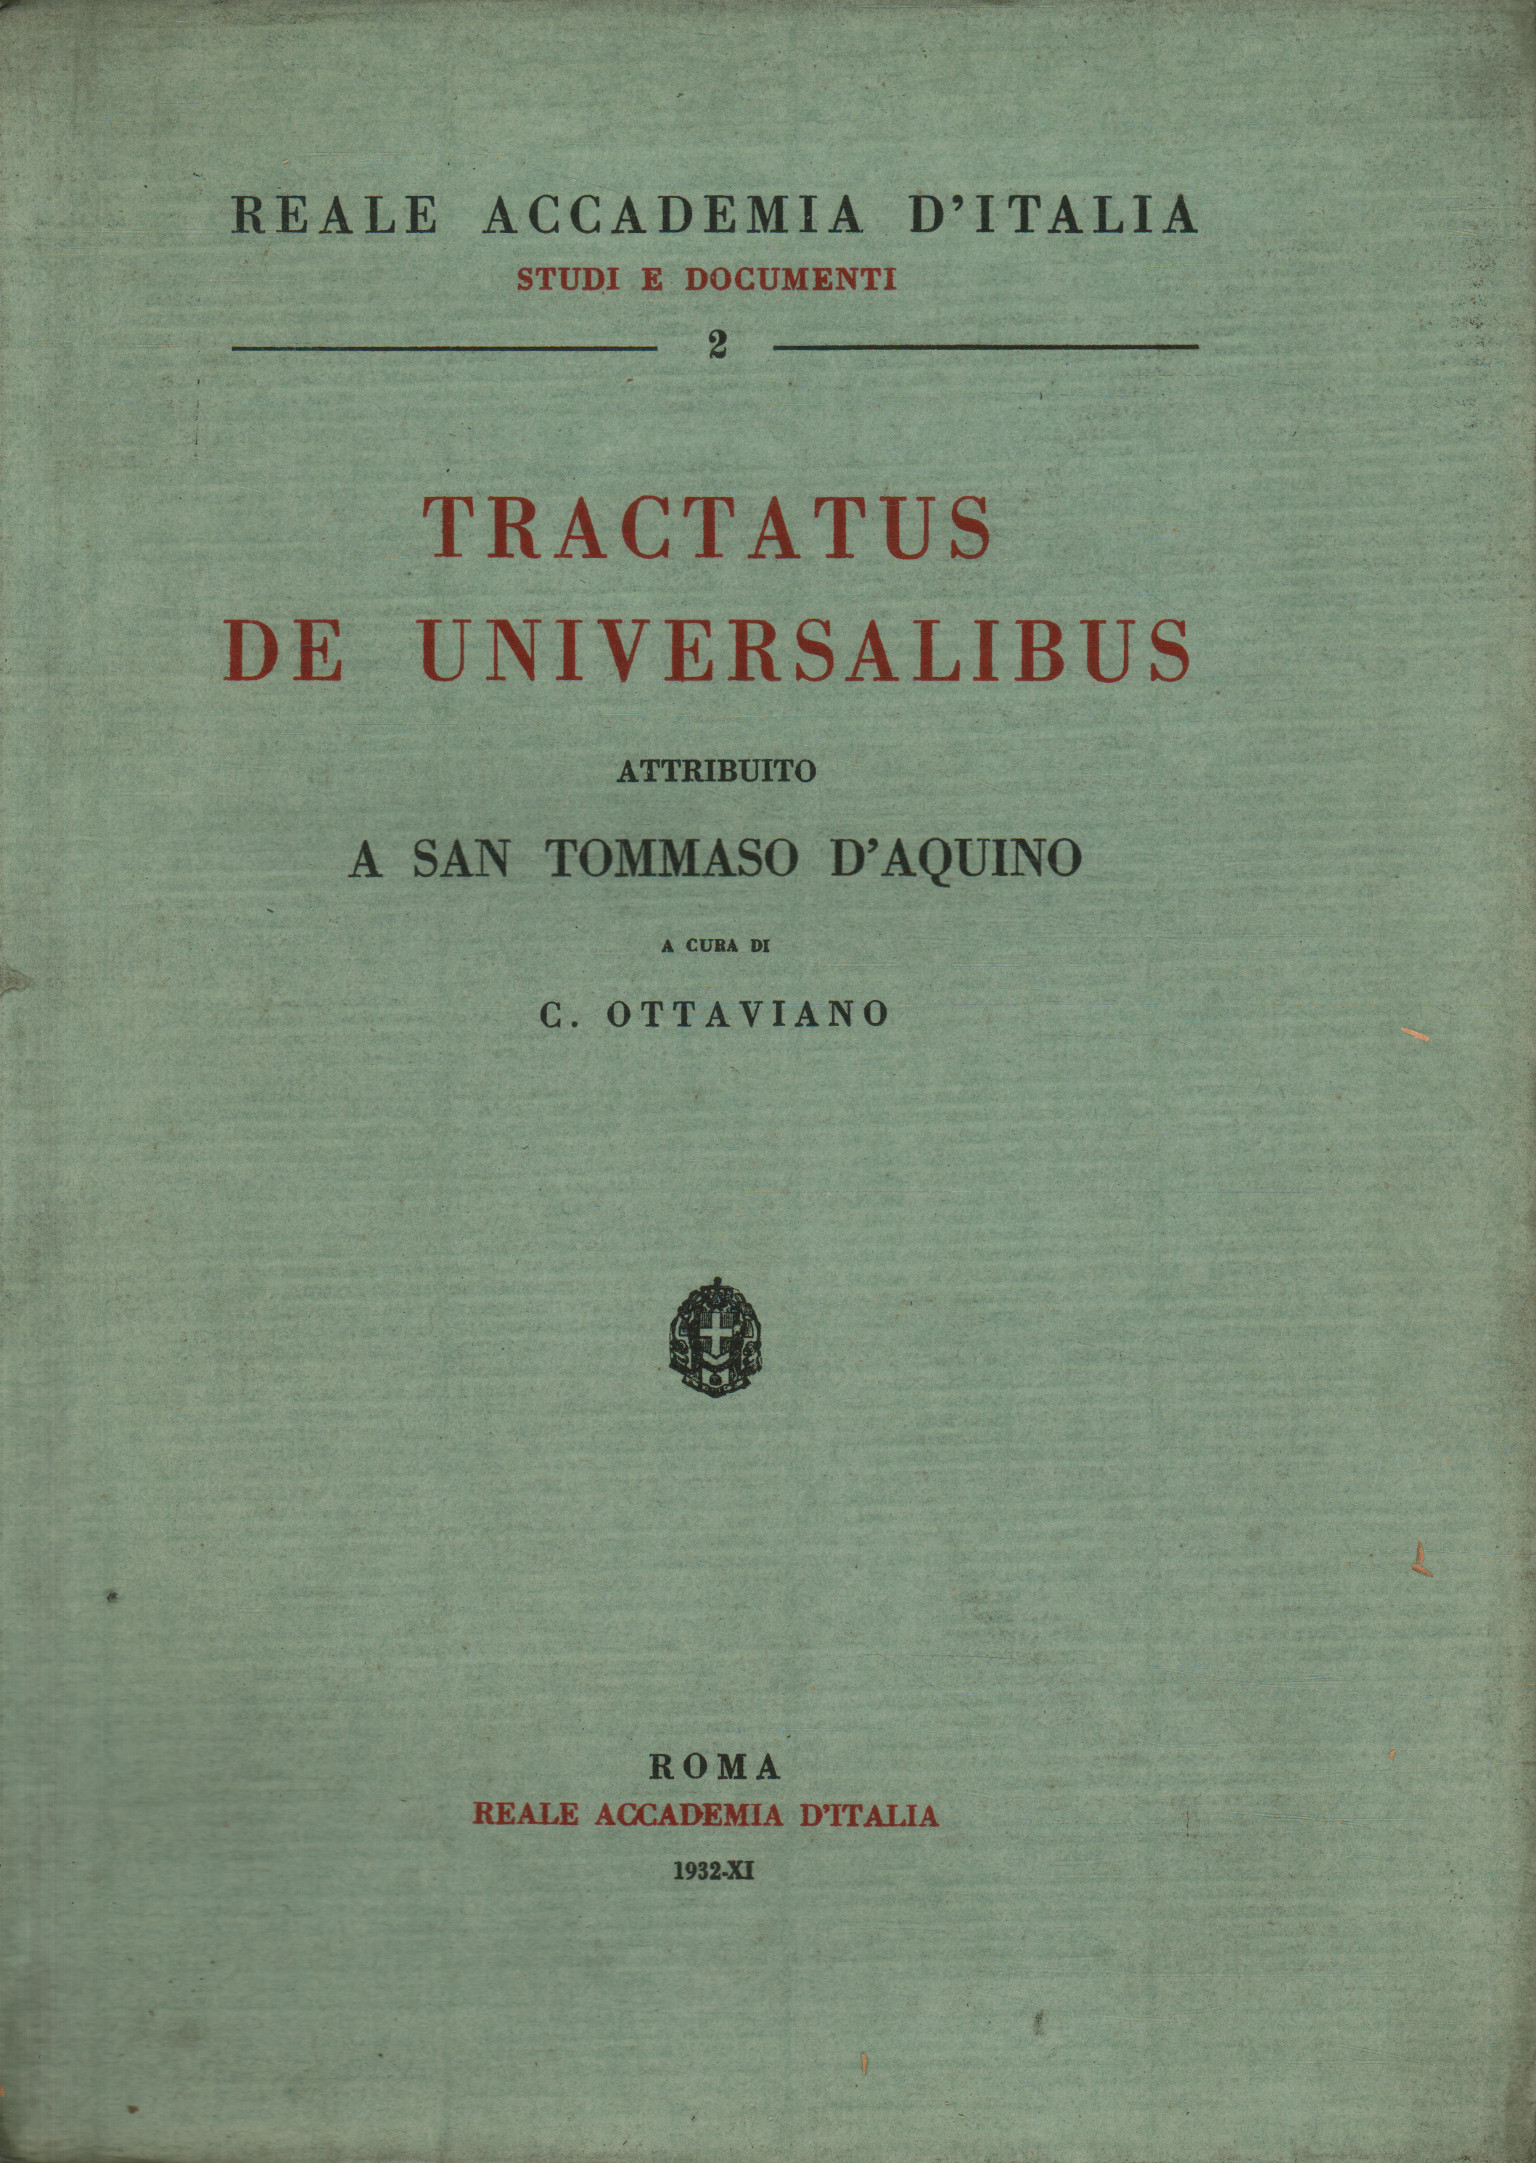 Tractatus de Universalibus attribué à